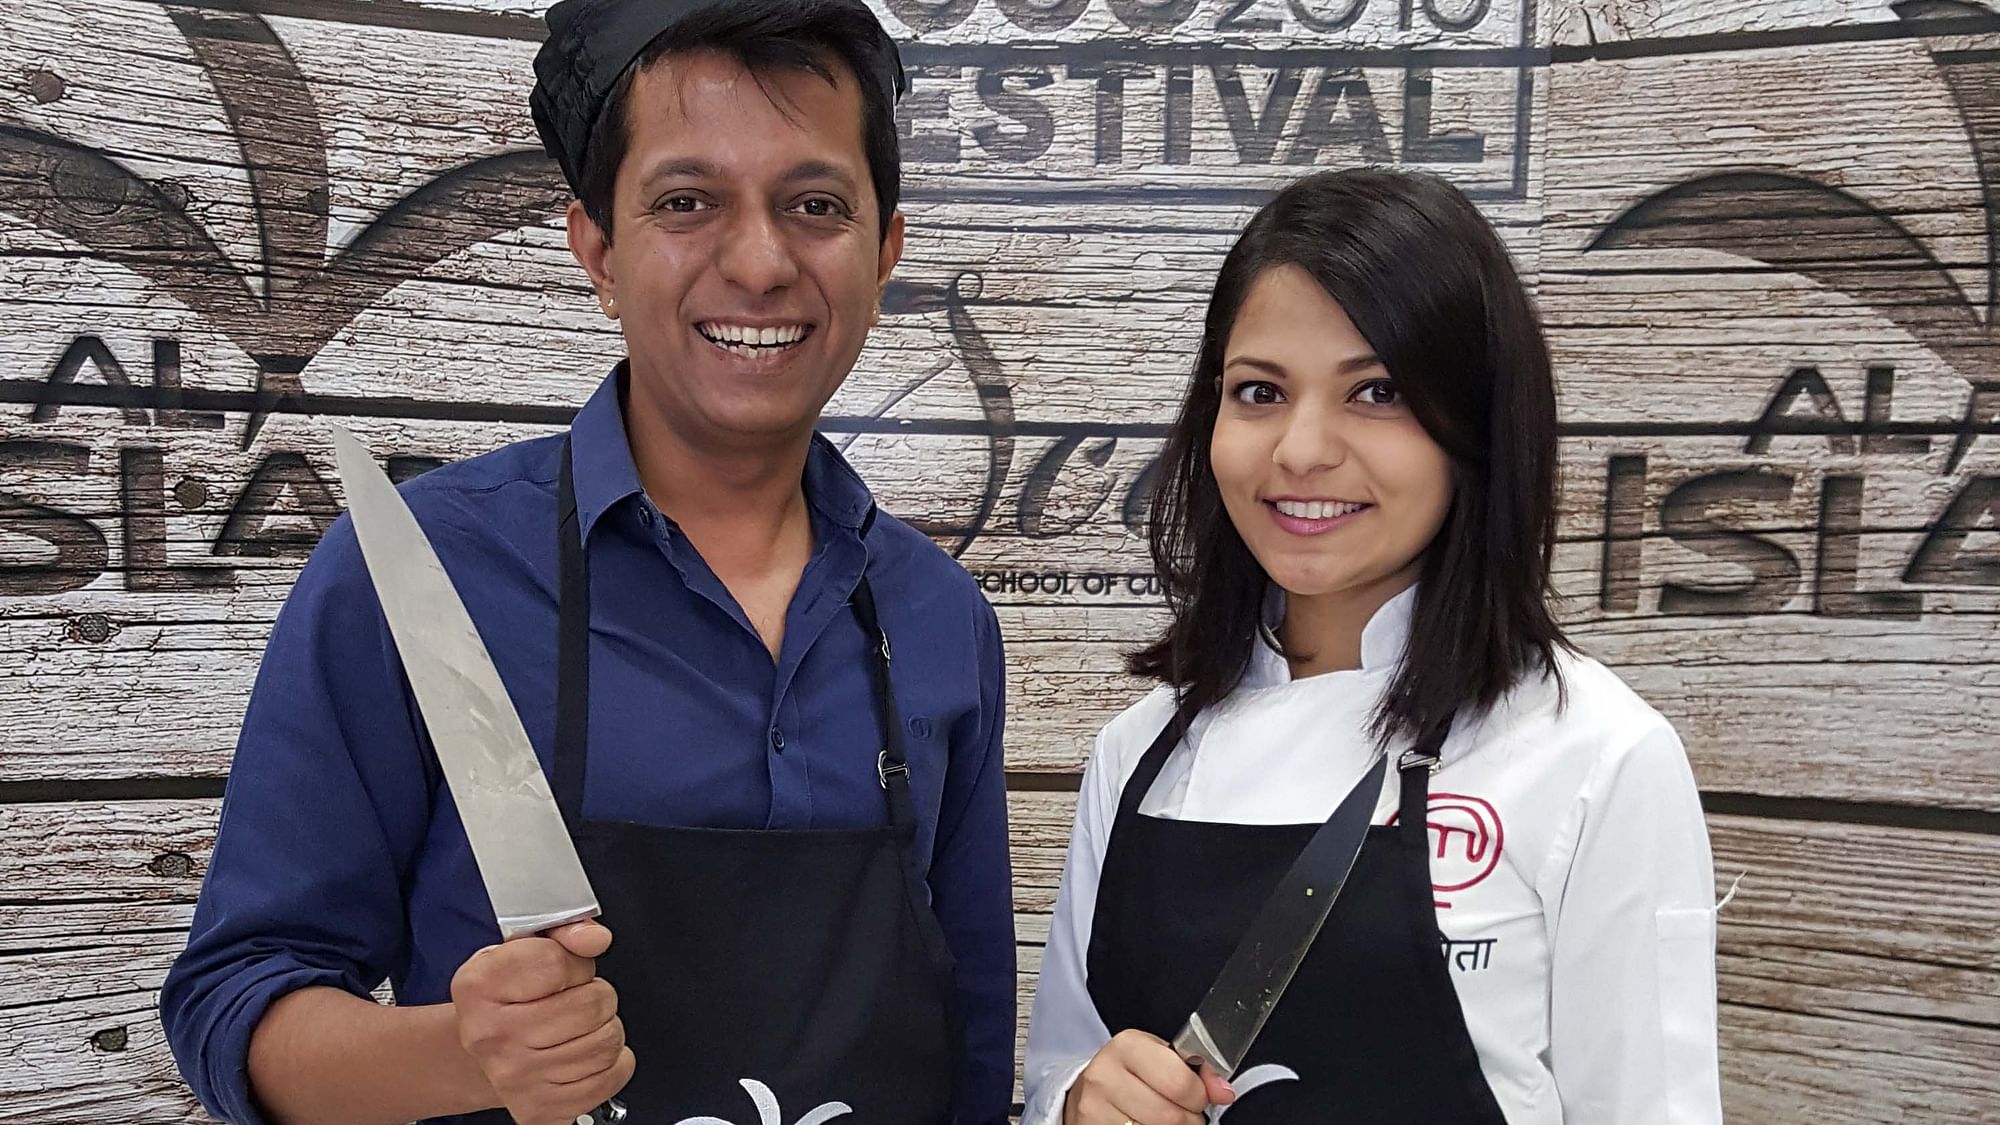 Rohit Khilnani and Nikita Gandhi at the Dubai Food Festival (Photo: The Quint)